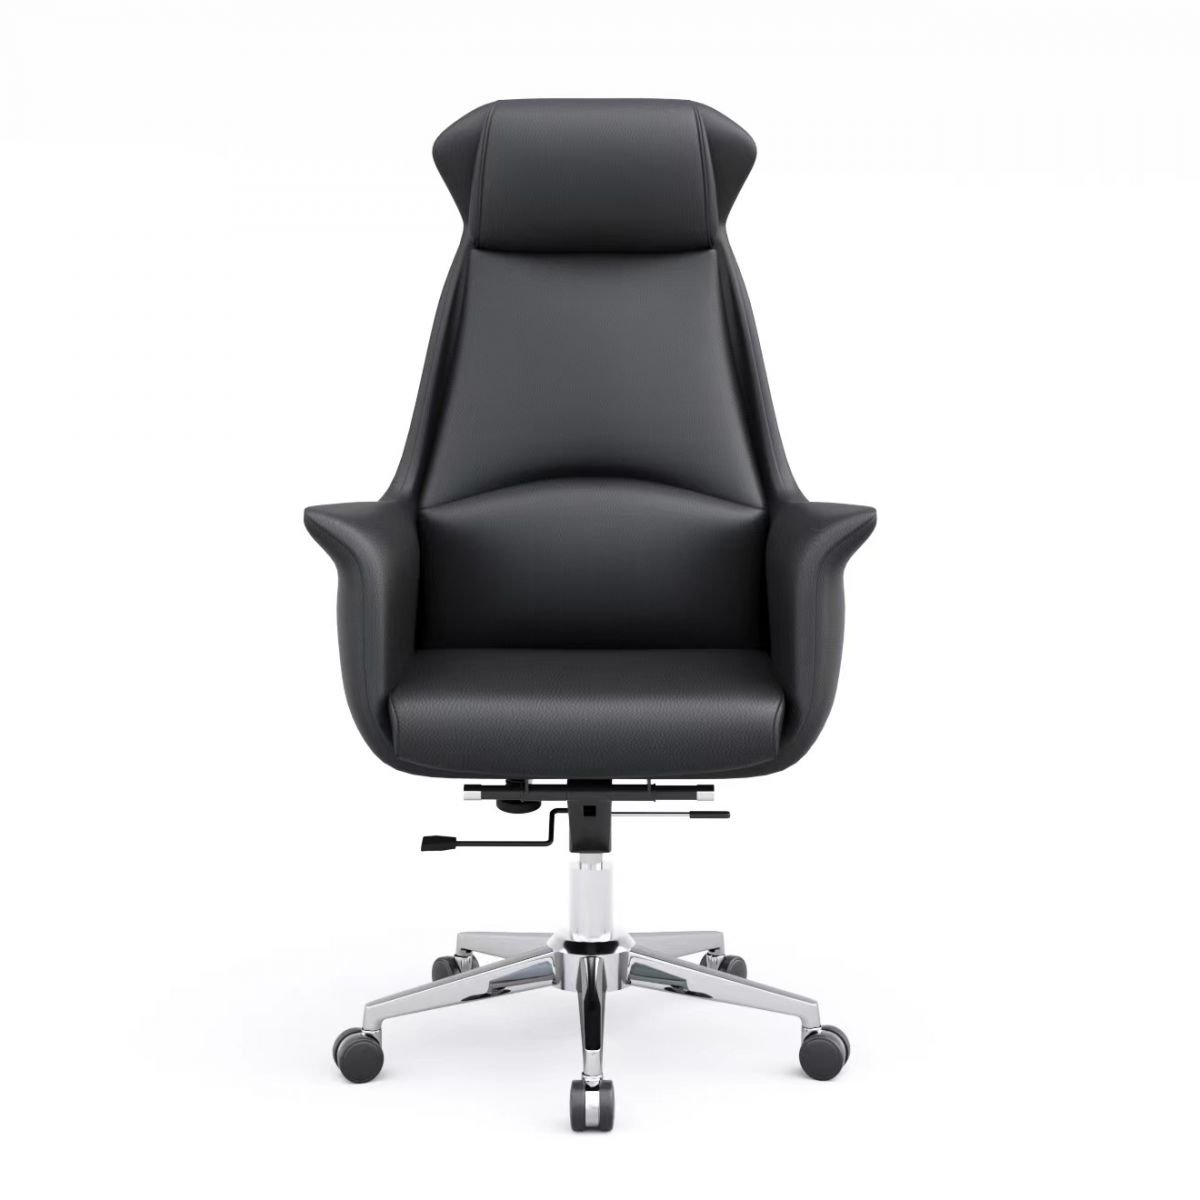 Ergonomic Ink Rawhide Office Furniture with Tilt Available, Headrest, Swivel Wheels, and Armrest, Black, Microfiber Leather